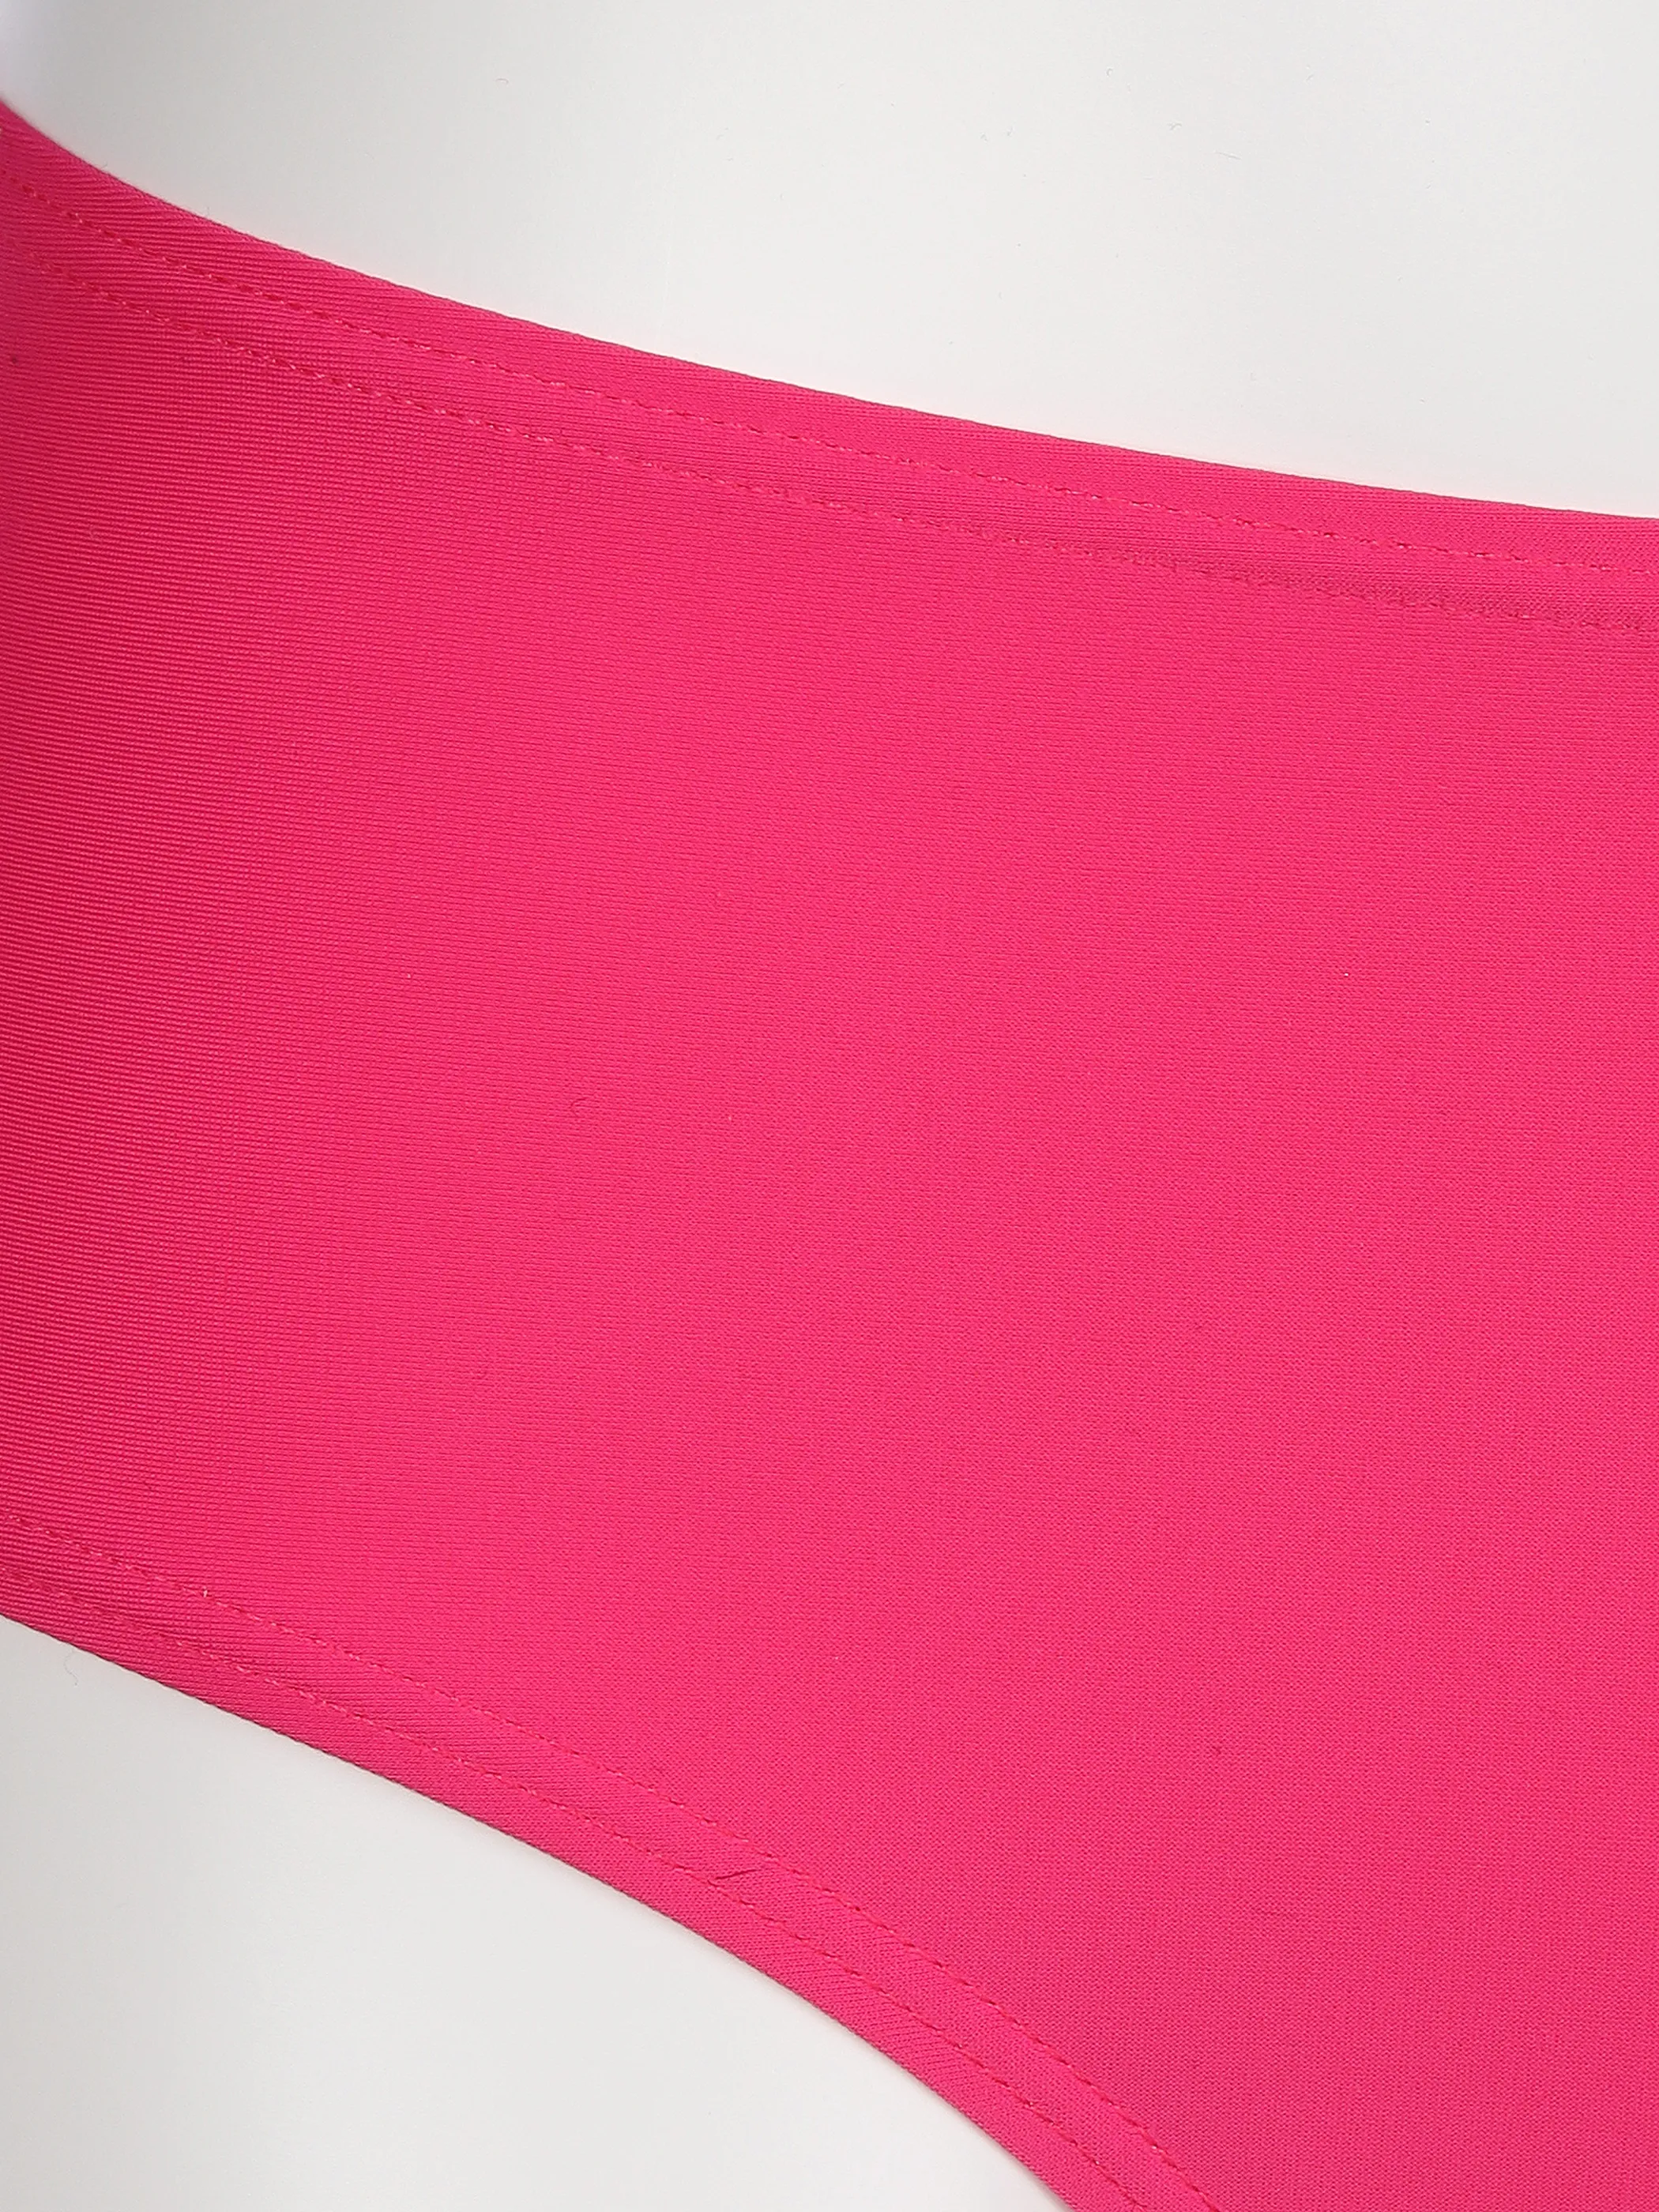 Grinario Sports Da-Bikini-Hose Pink 863019 PINK 3